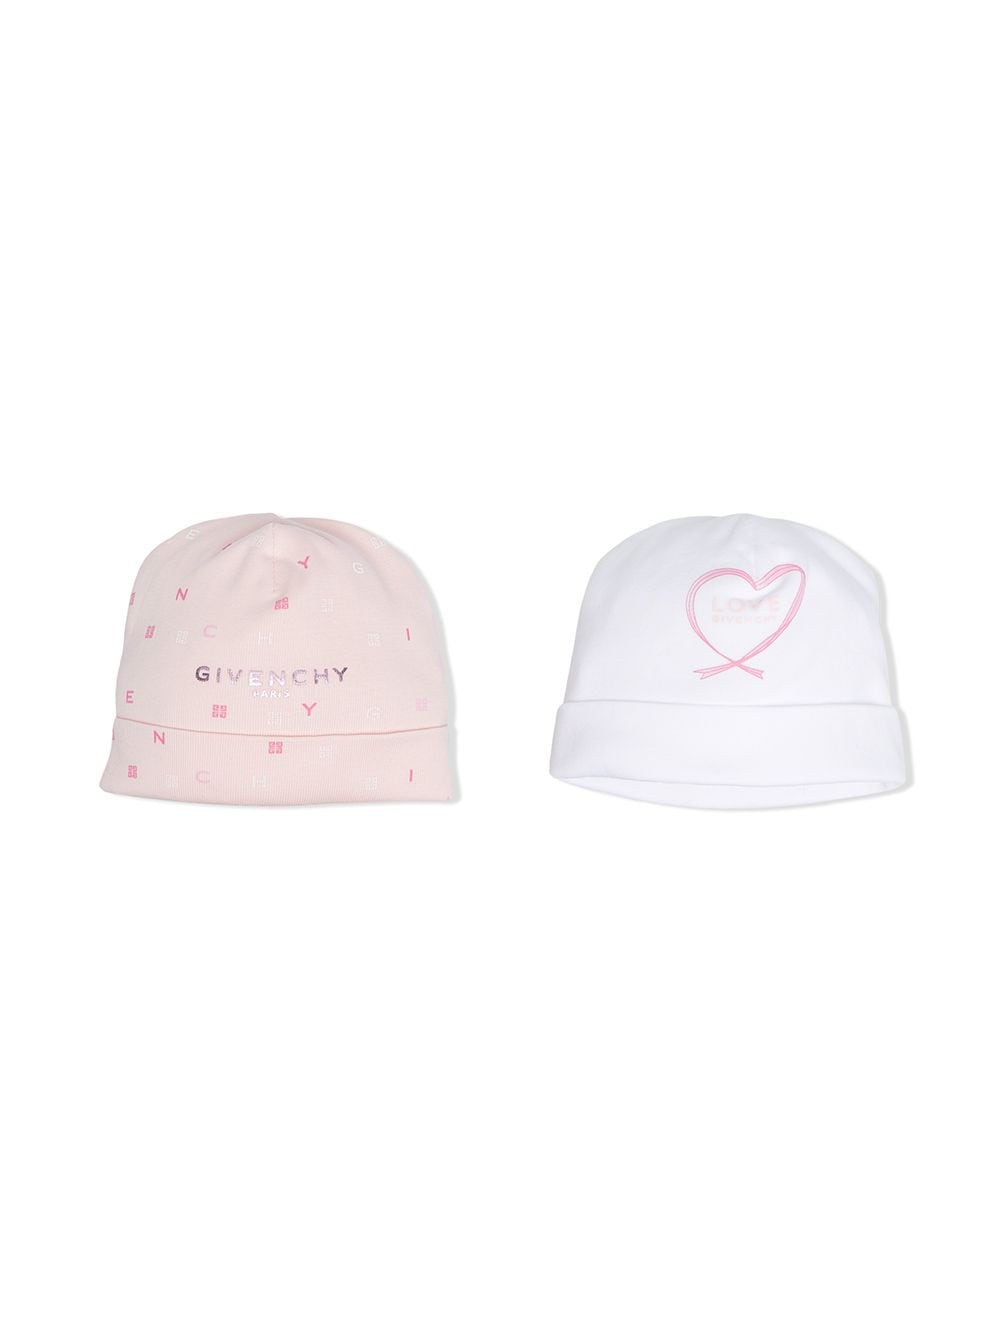 Givenchy Kids set of 2 logo print hats - White